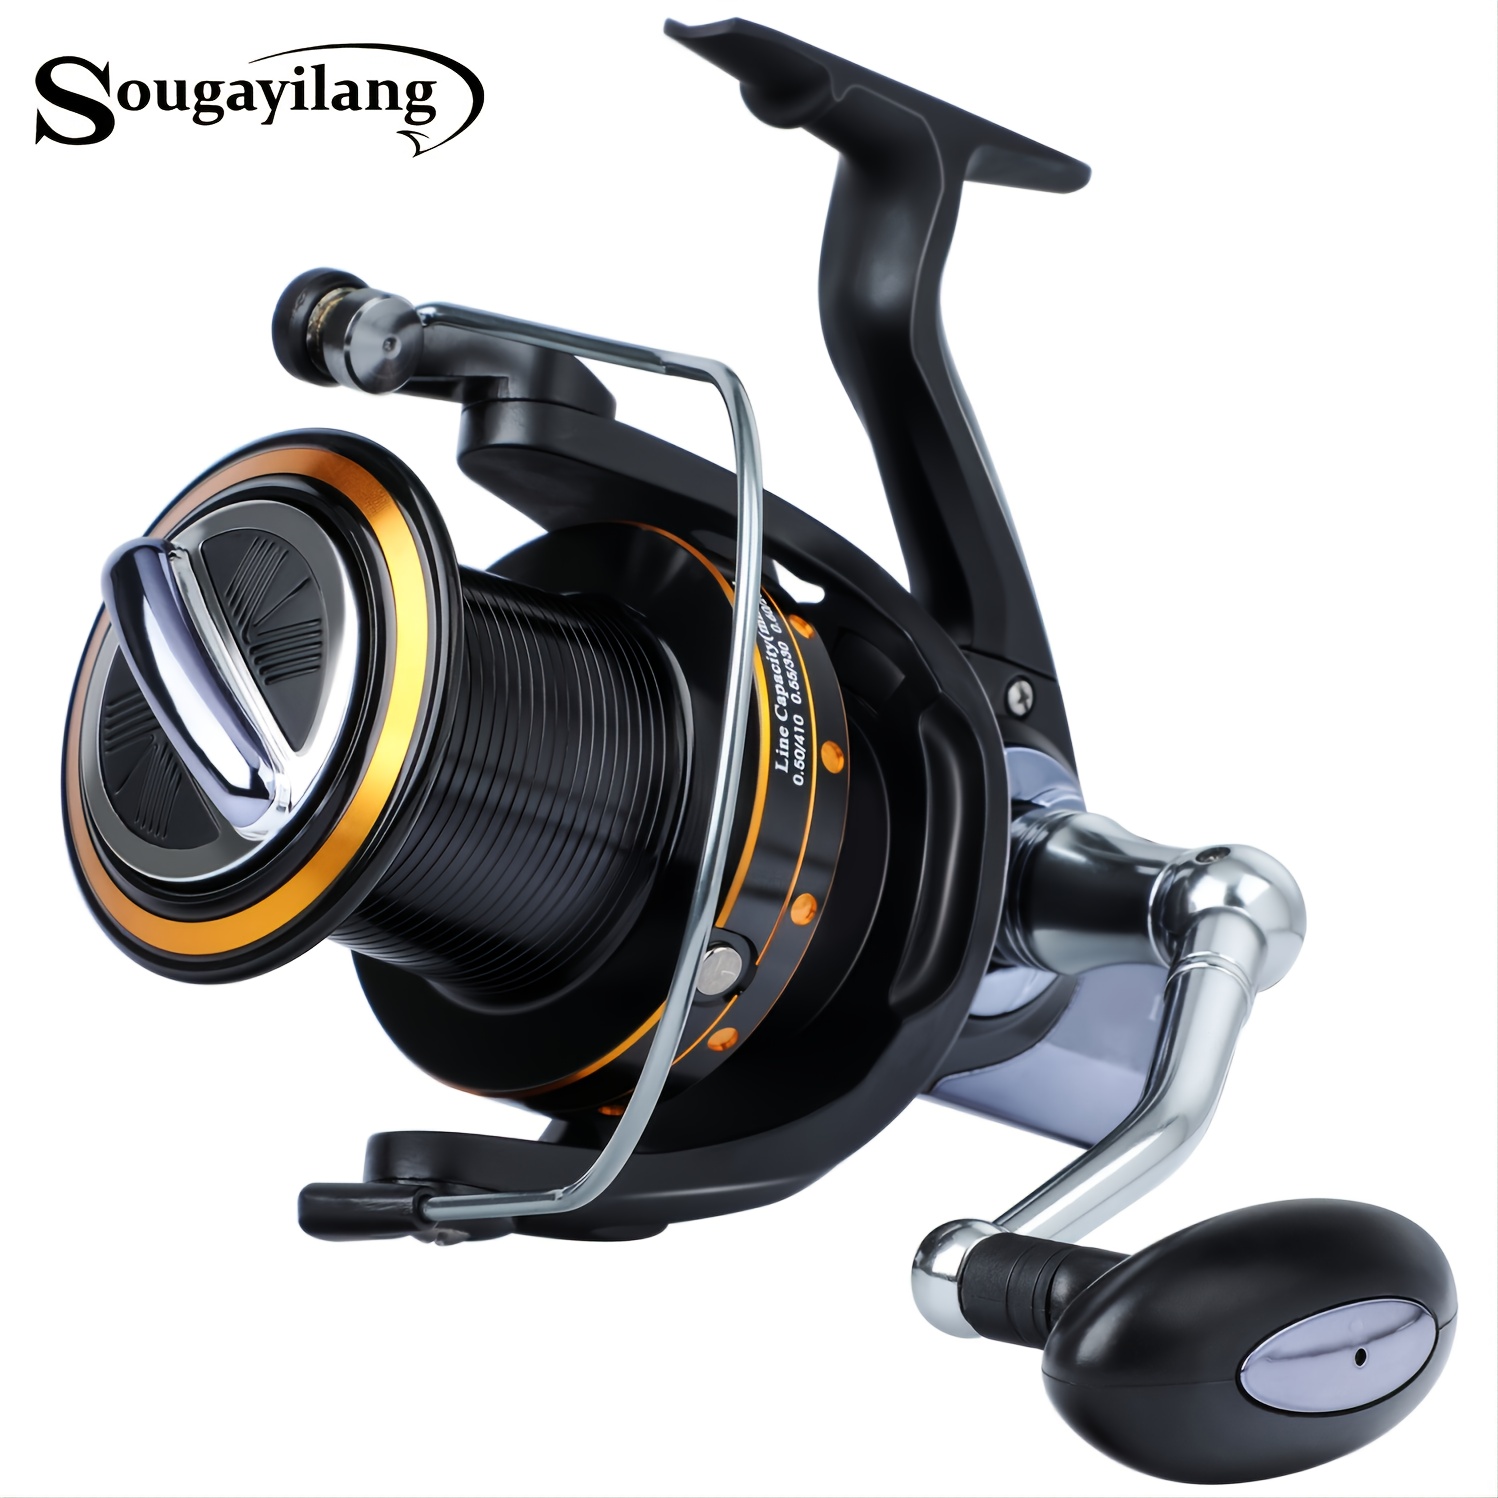 Sougayilang Spinning Fishing Reels - High Performance Reels For